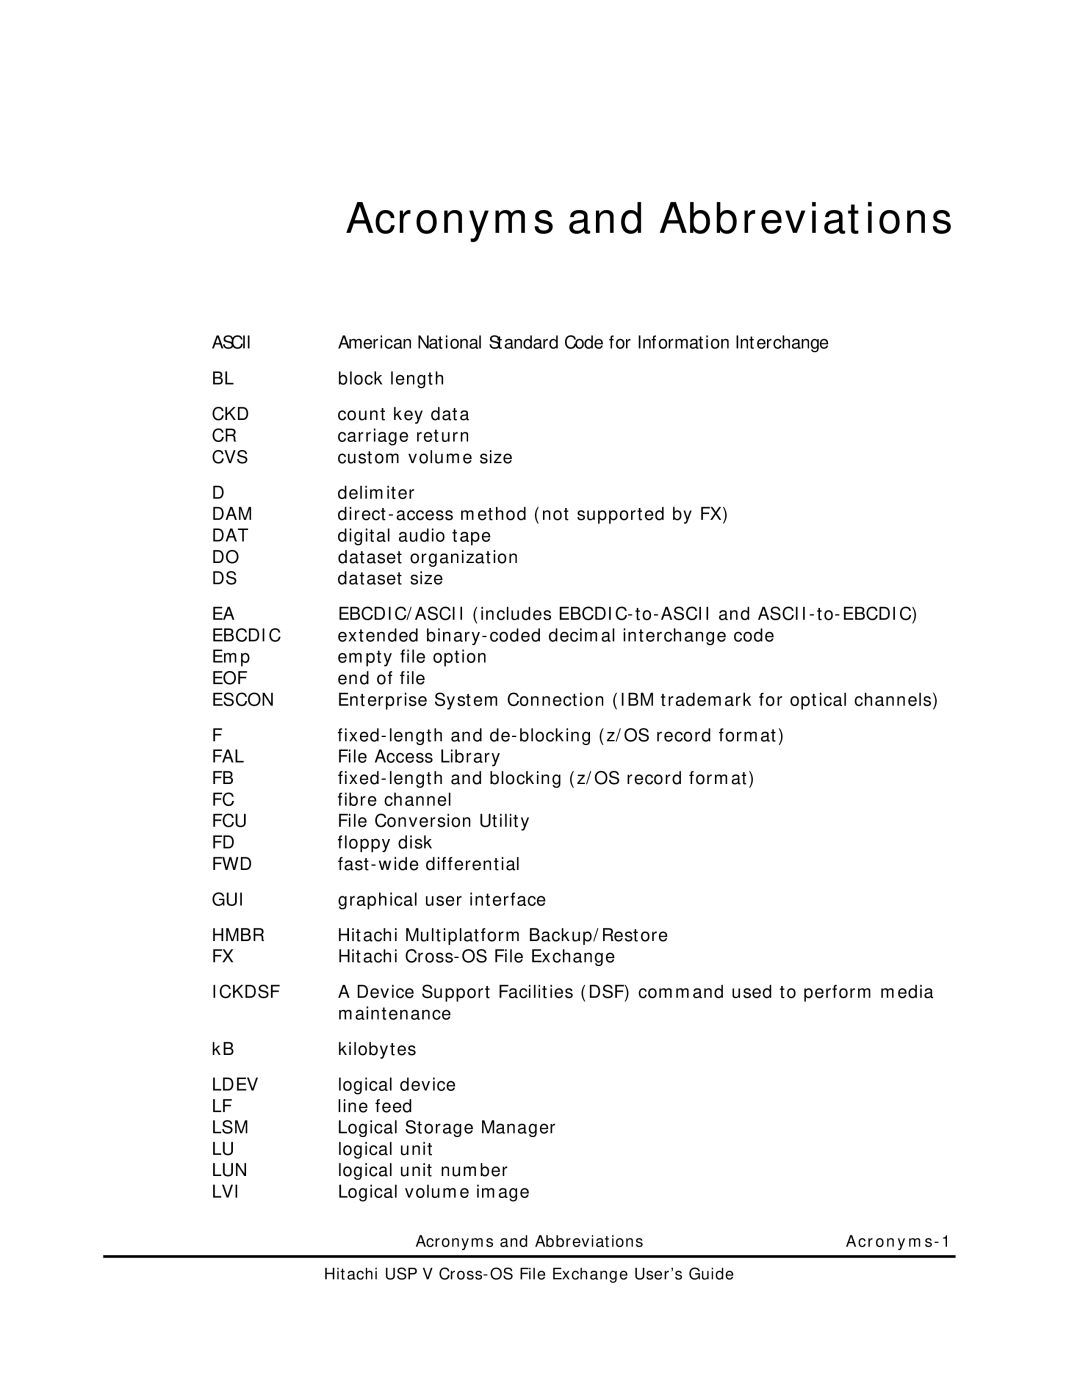 Hitachi MK-96RD647-01 manual Acronyms and Abbreviations 